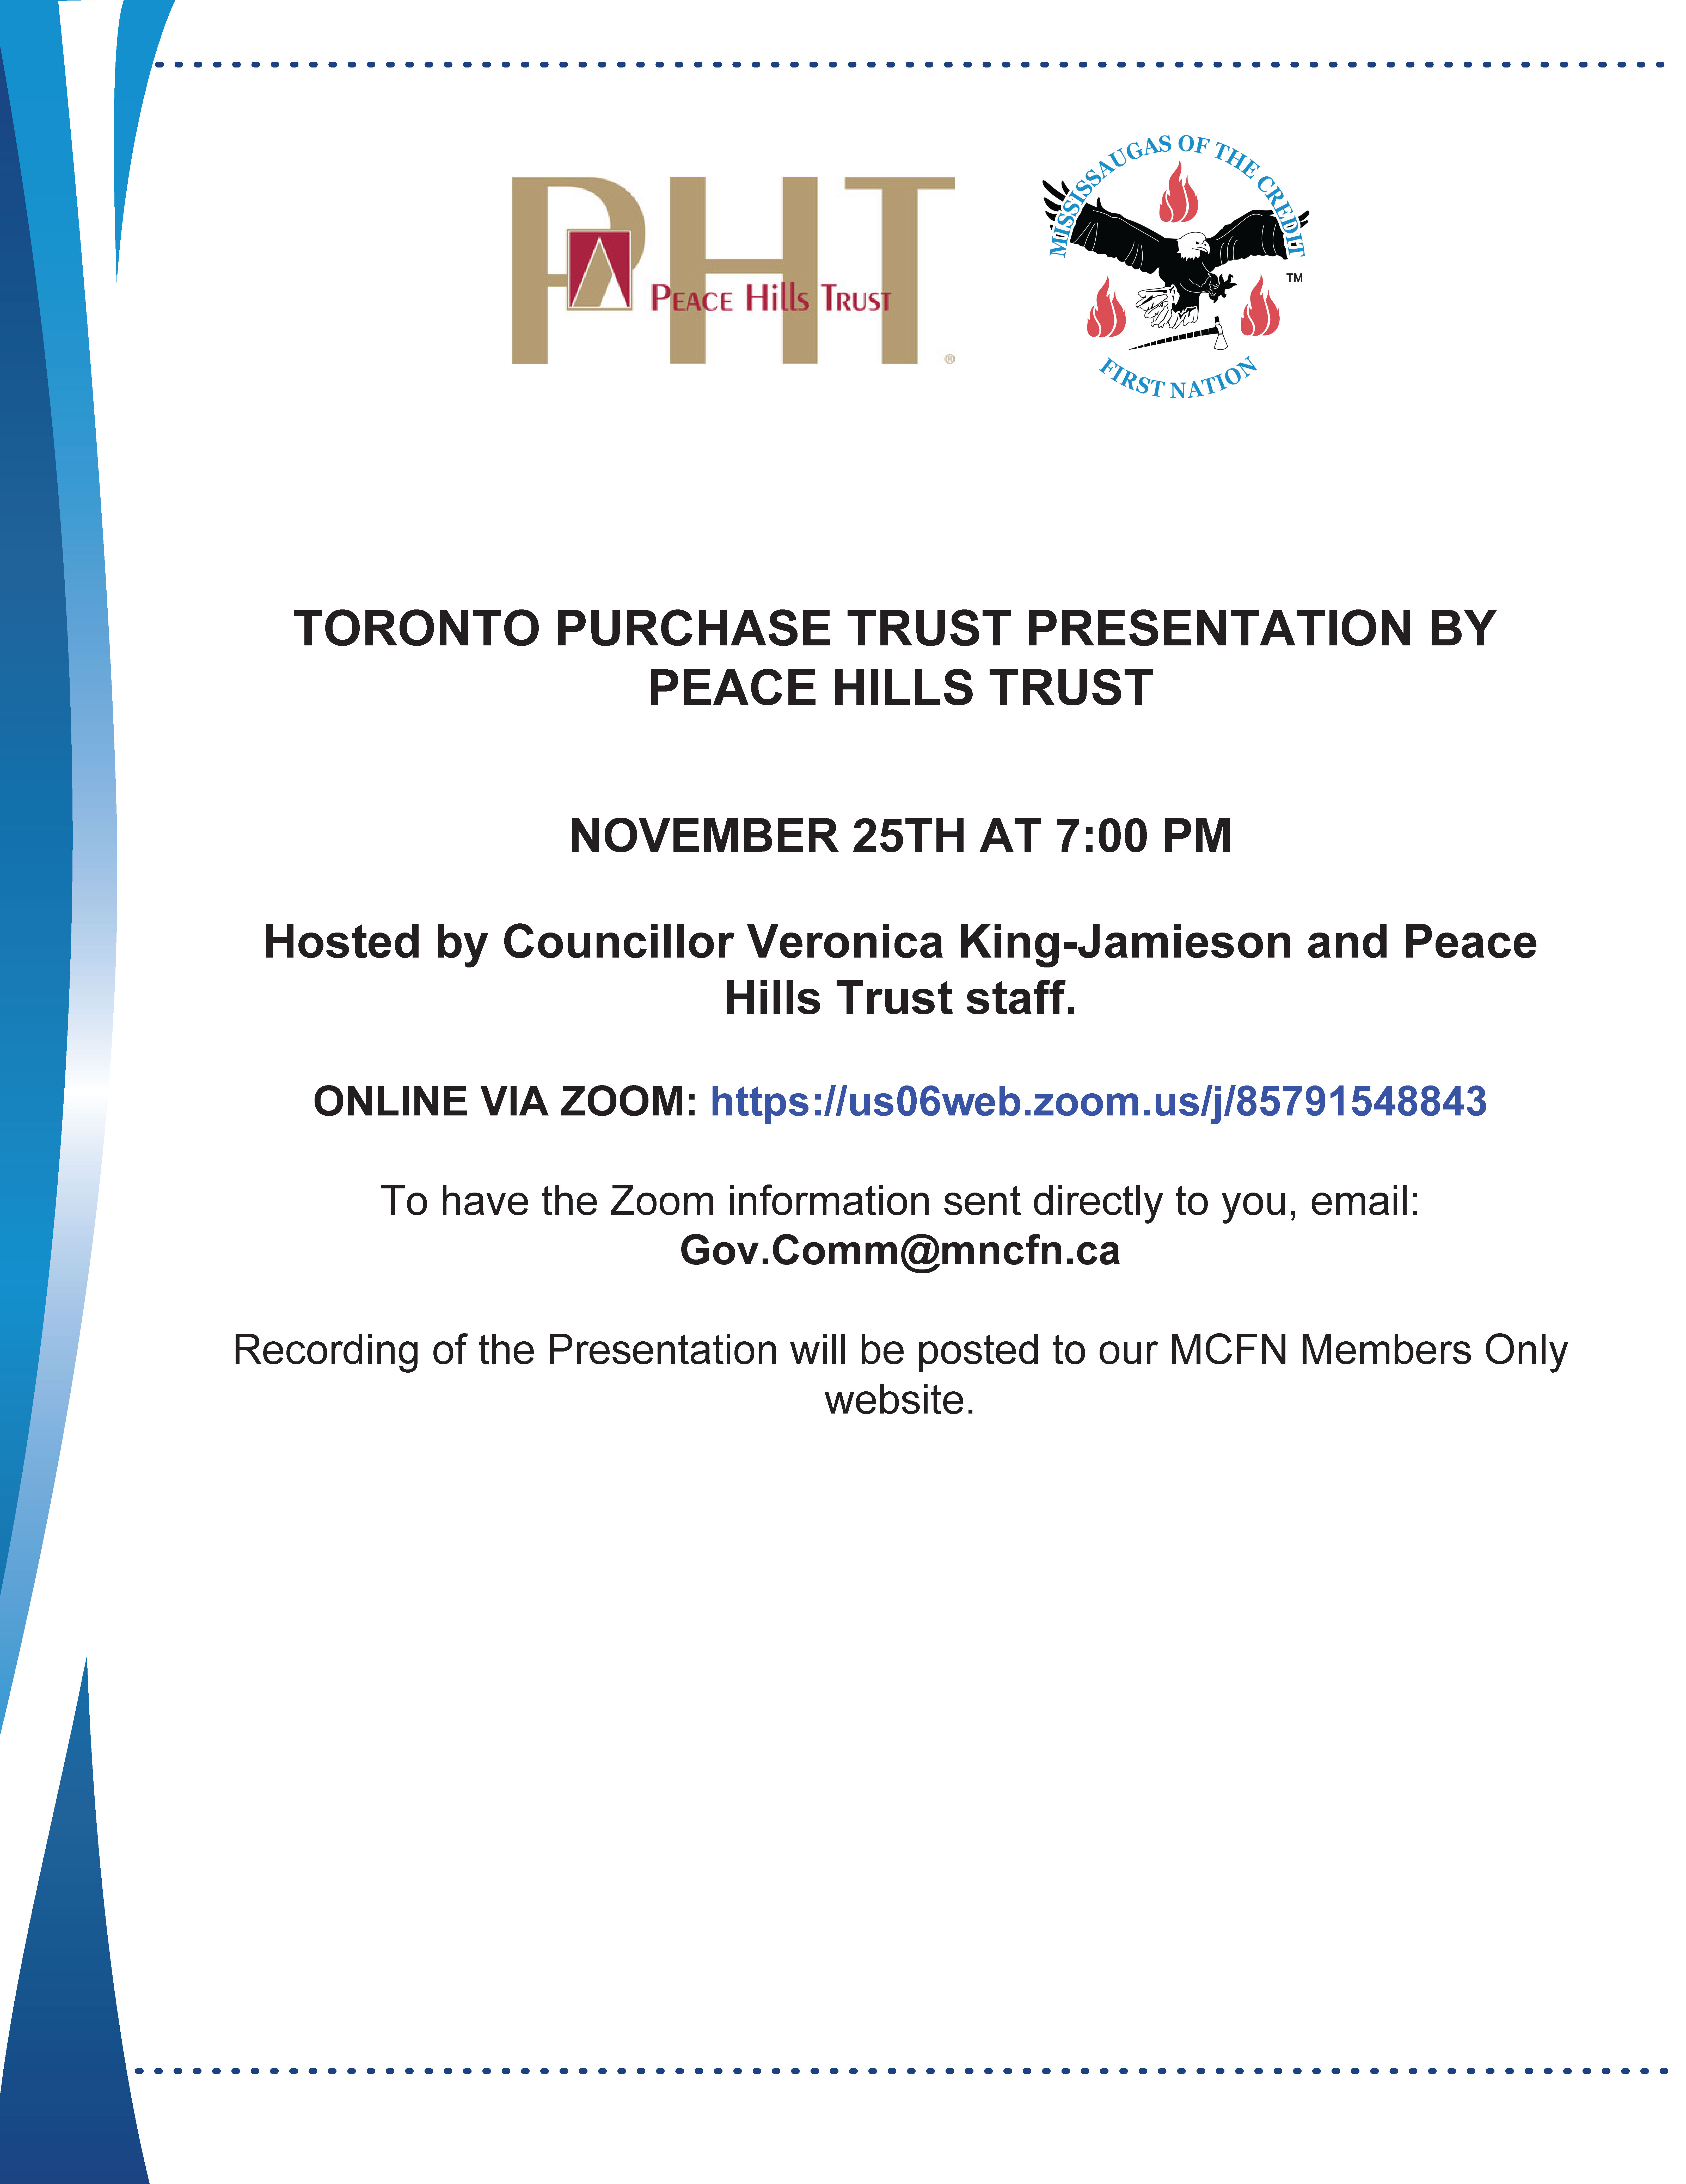 Toronto Purchase Trust – Peace Hills Trust presentation